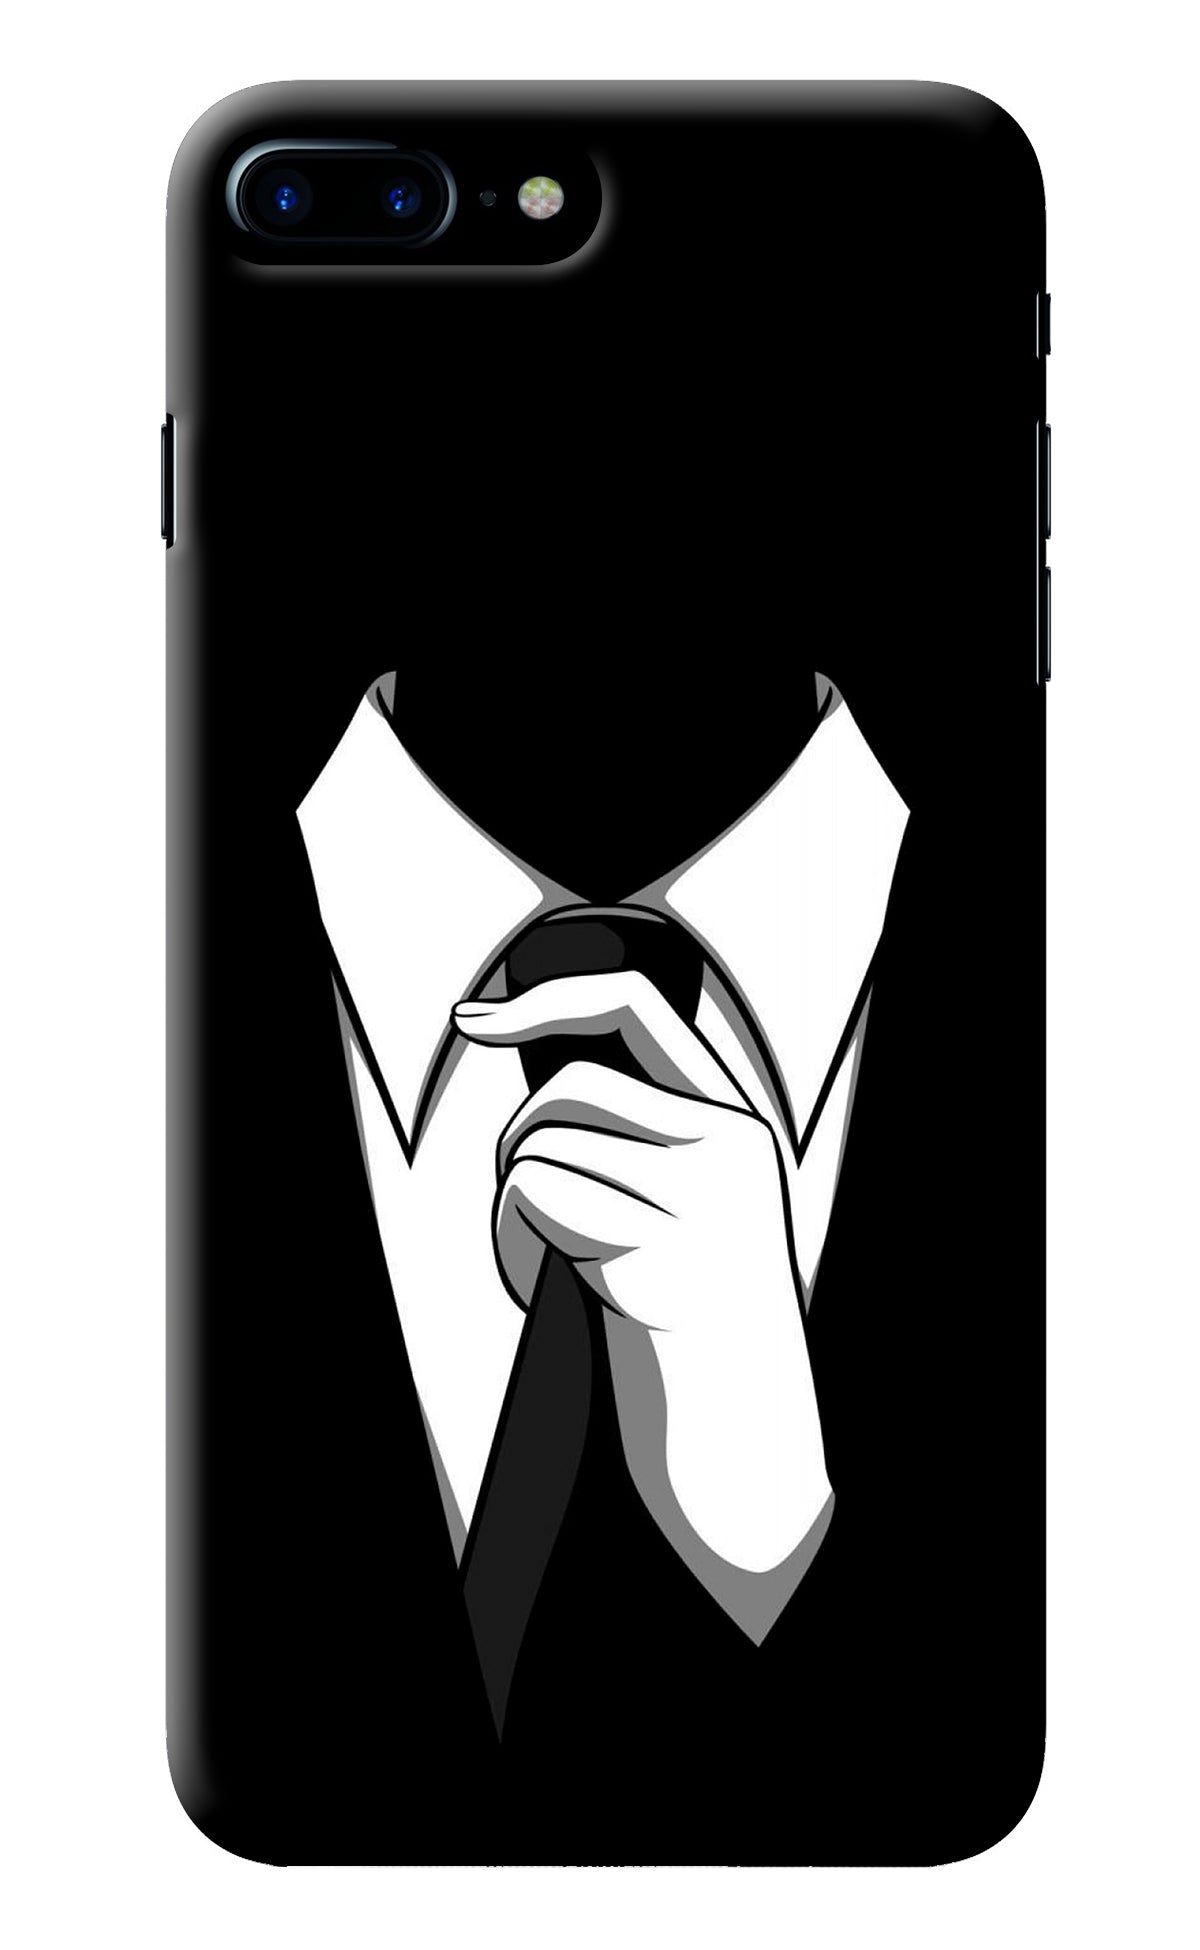 Black Tie iPhone 8 Plus Back Cover